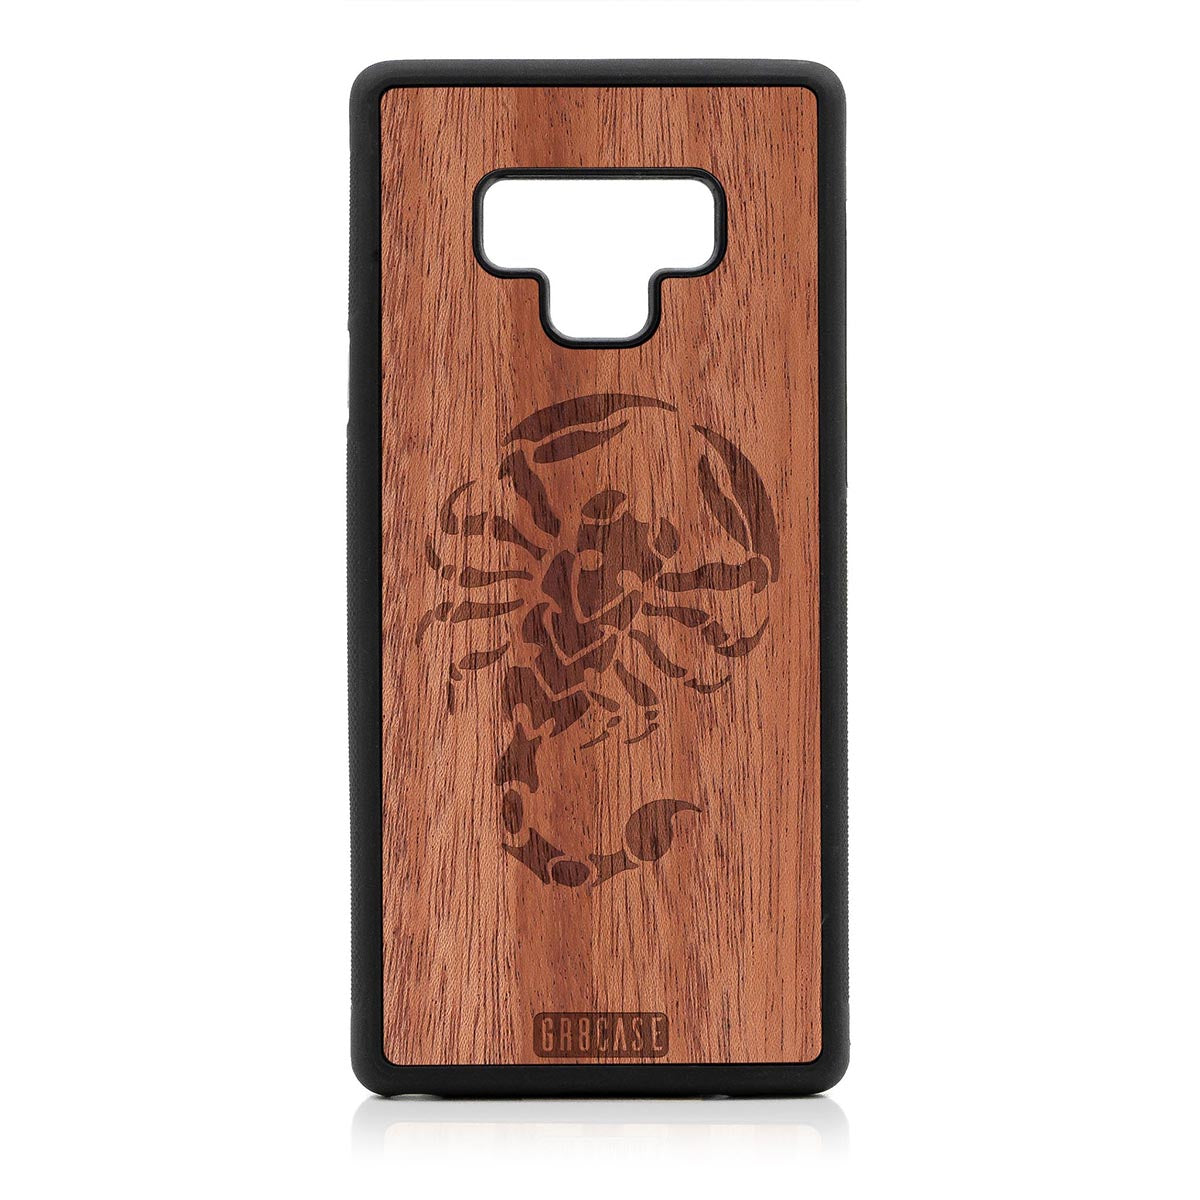 Scorpion Design Wood Case Samsung Galaxy Note 9 by GR8CASE